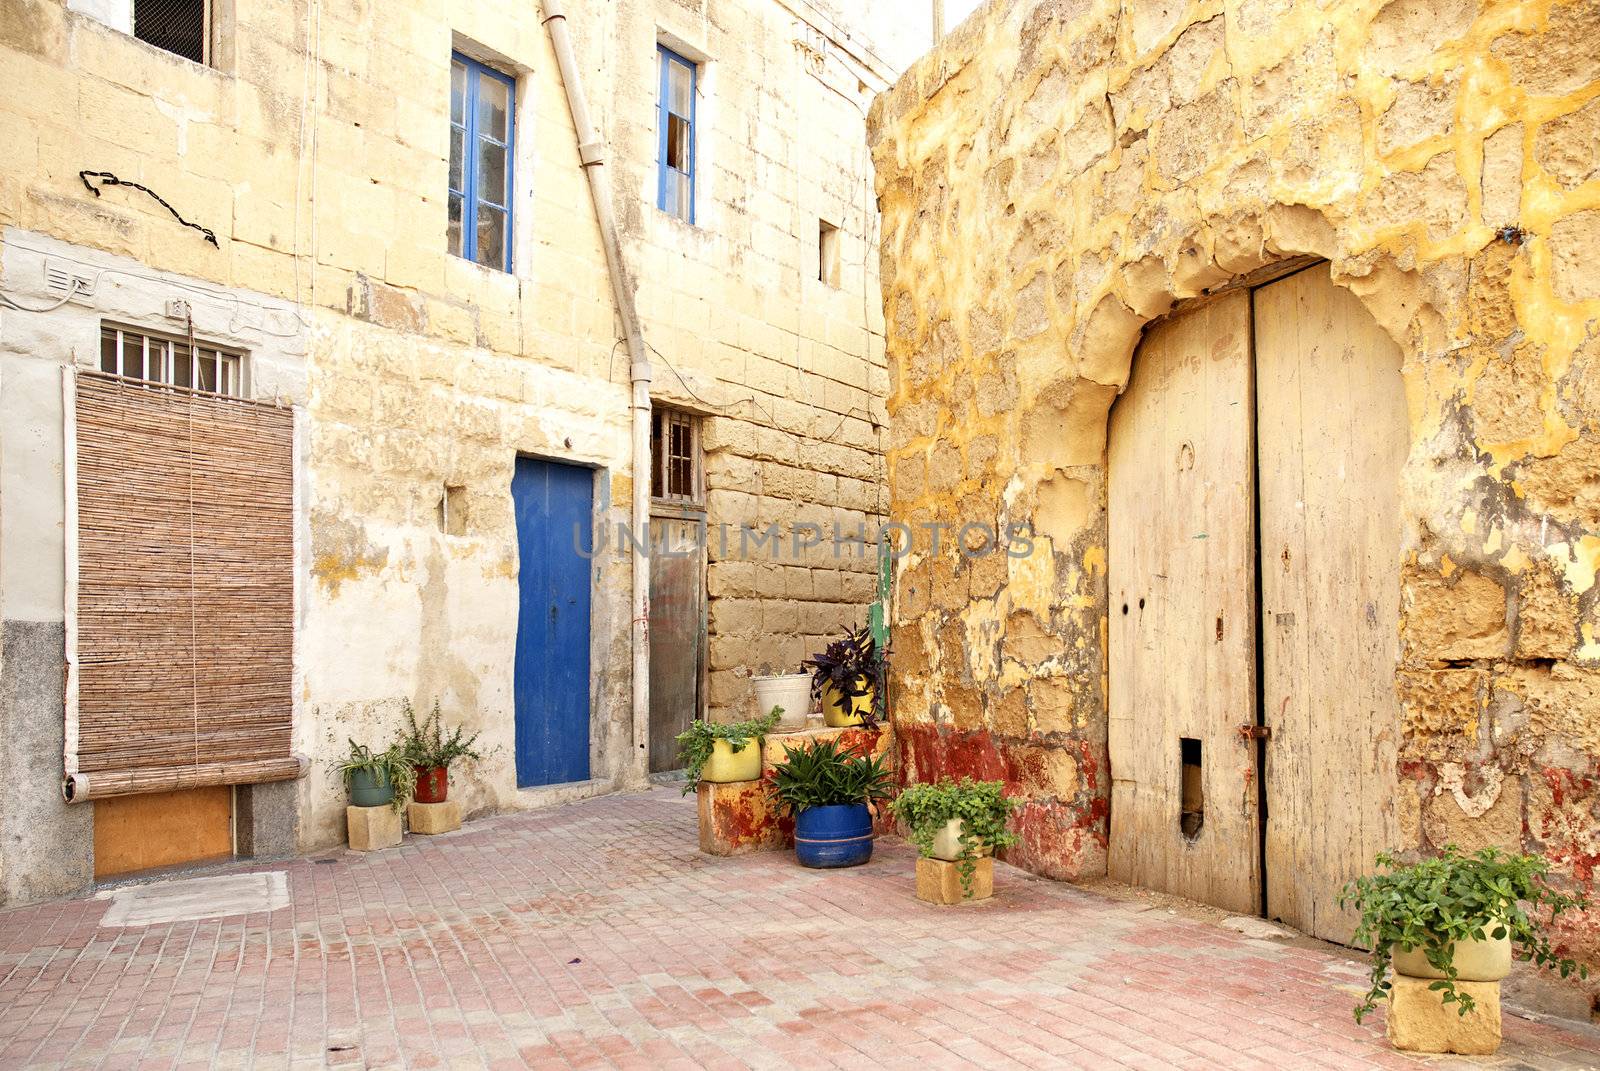 old residential area of valetta malta by jackmalipan